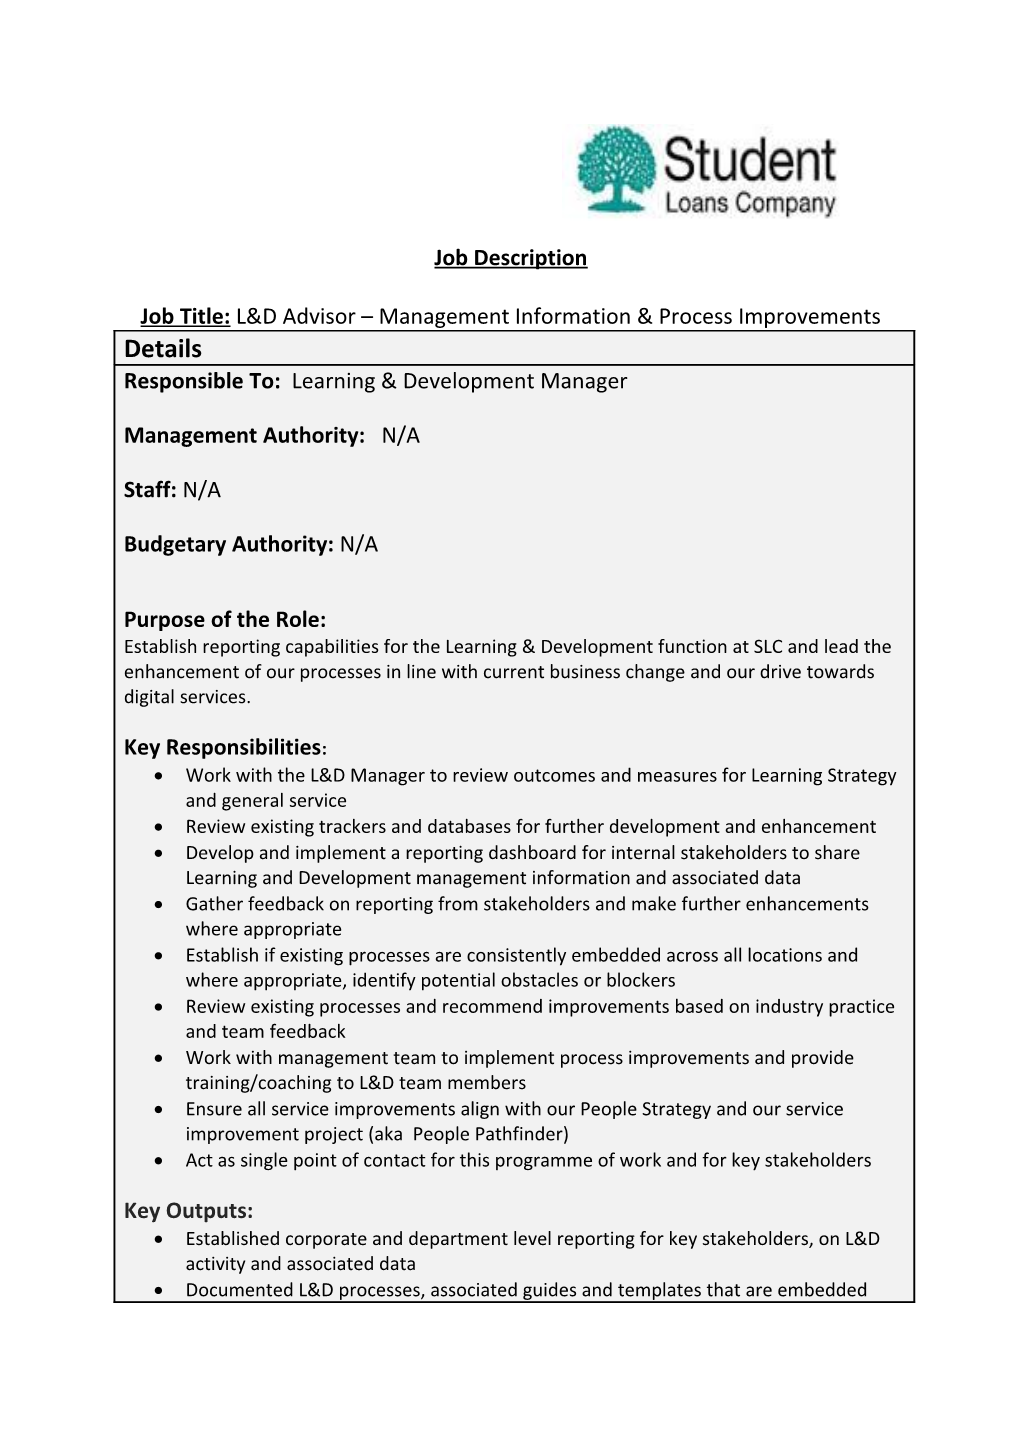 Job Title: L&D Advisor Management Information & Process Improvements